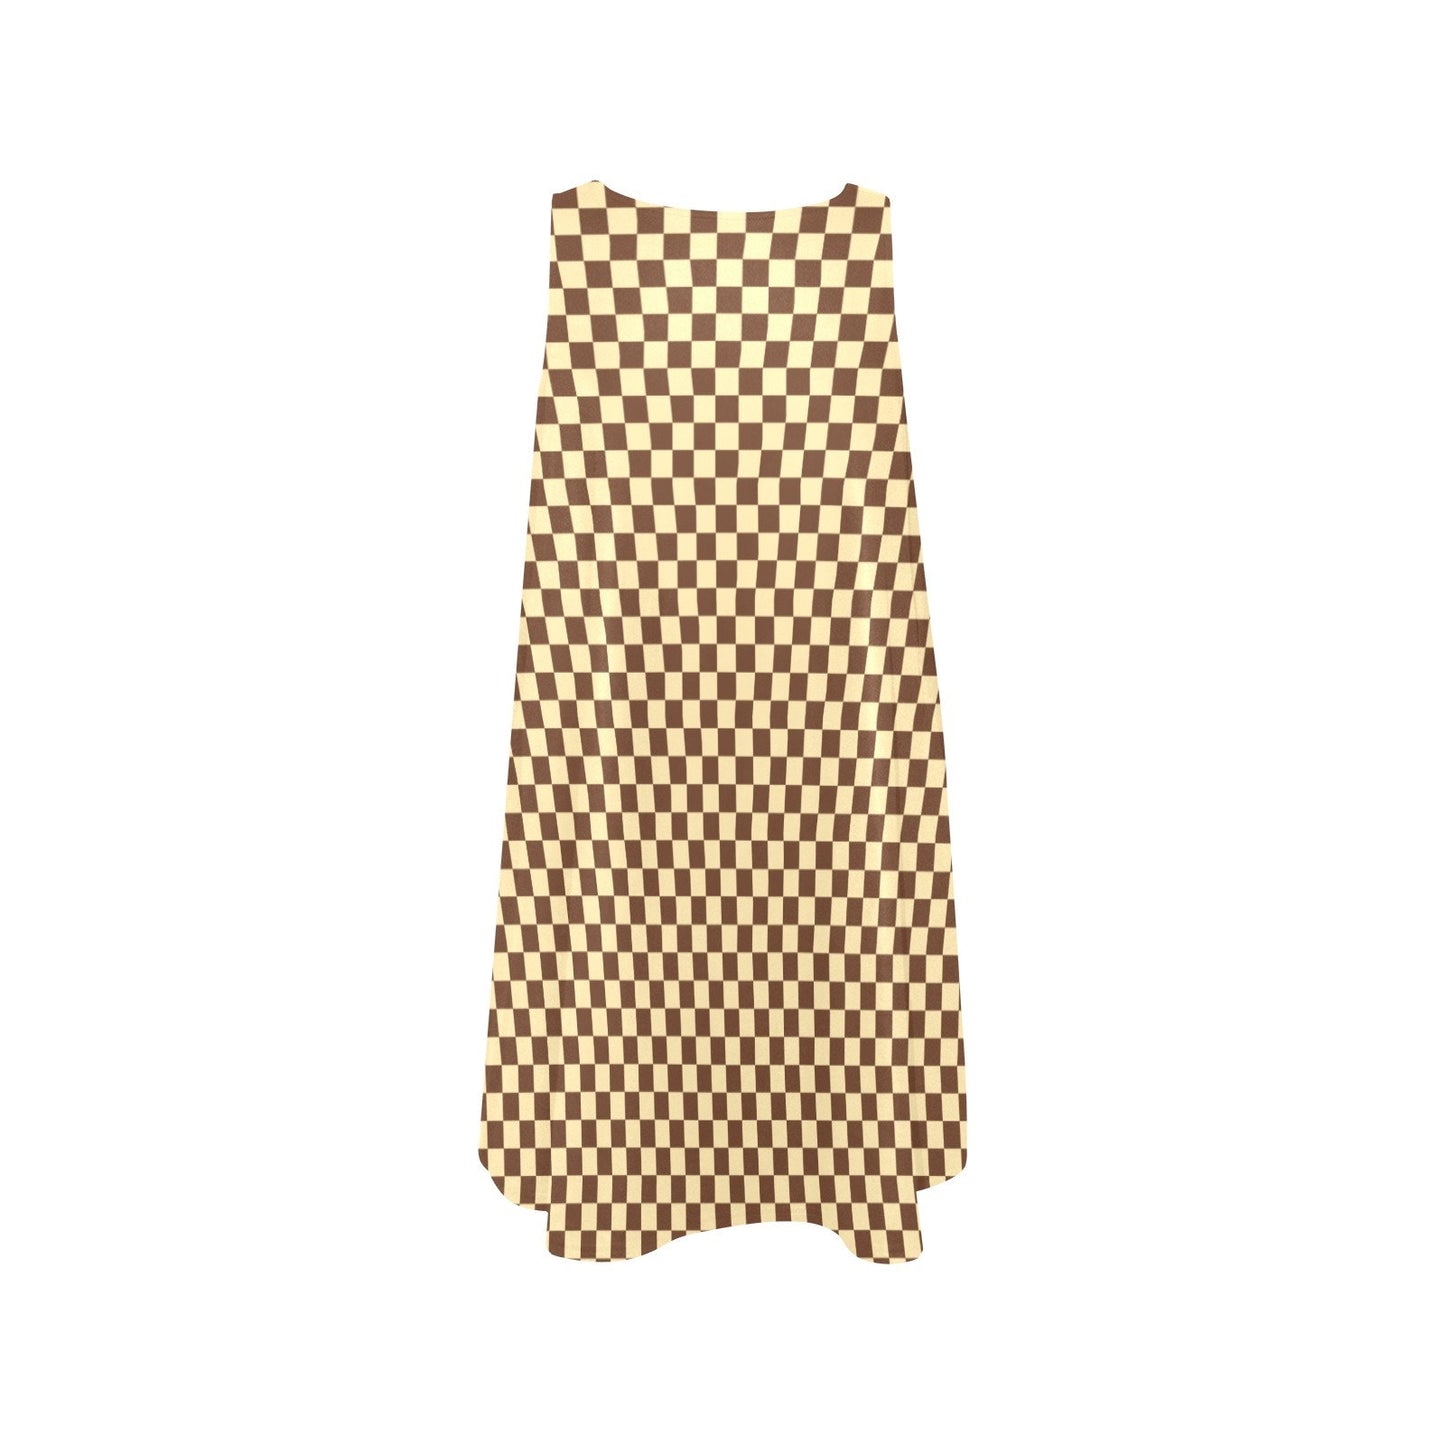 Kariertes Kleid, braunes Karokleid, 60er-70er-Jahre-inspiriertes Kleid, Kleid im Vintage-Stil, Zeltkleid, Minikleid, Go-Go-Kleid